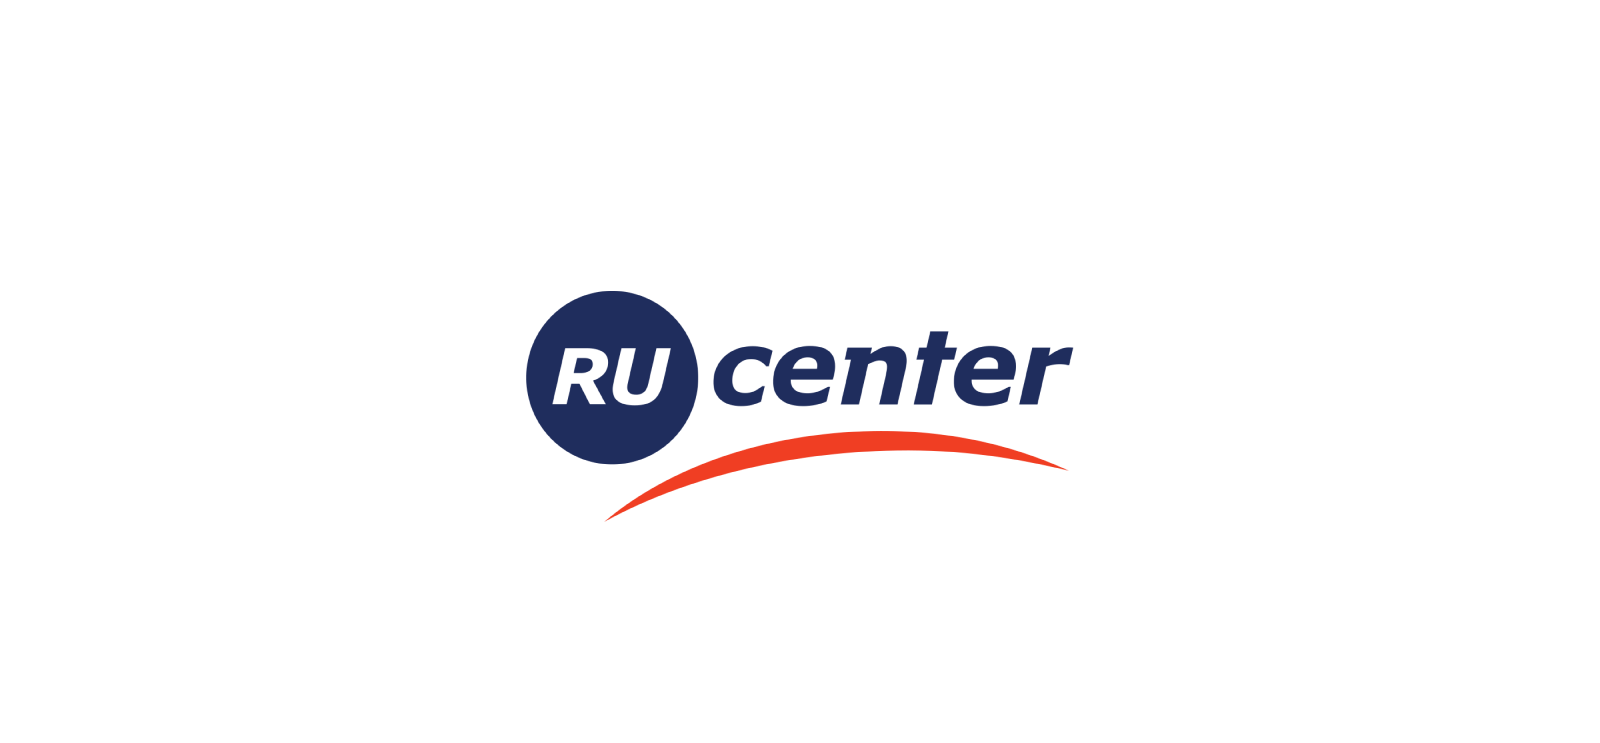 Password nic ru. Ru-Center. Ру центр лого. Логотип руцентр. Ru Center logo.